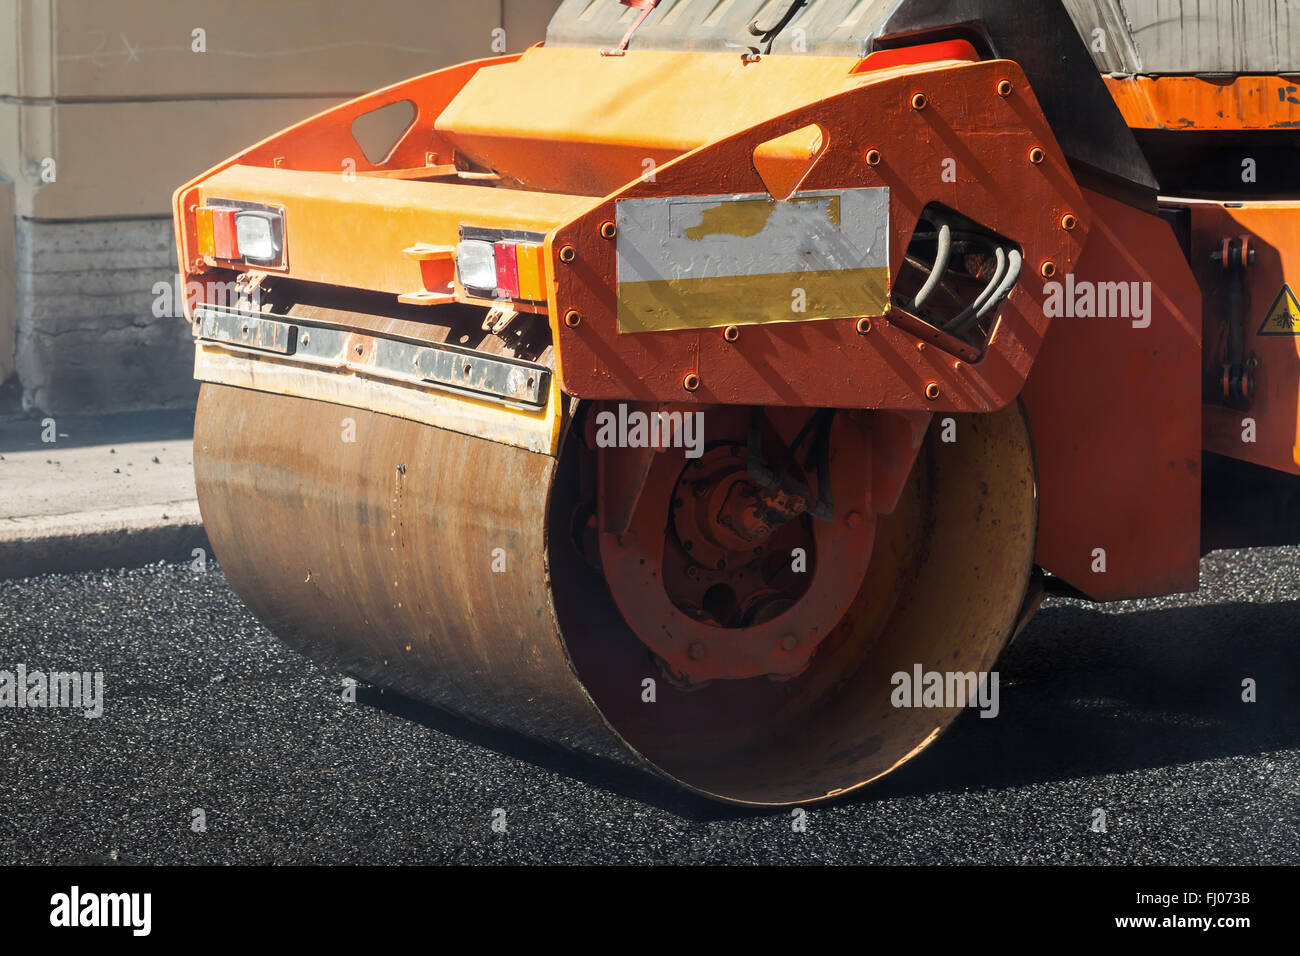 Fragment of orange roller, urban road is under construction, asphalting in progress Stock Photo